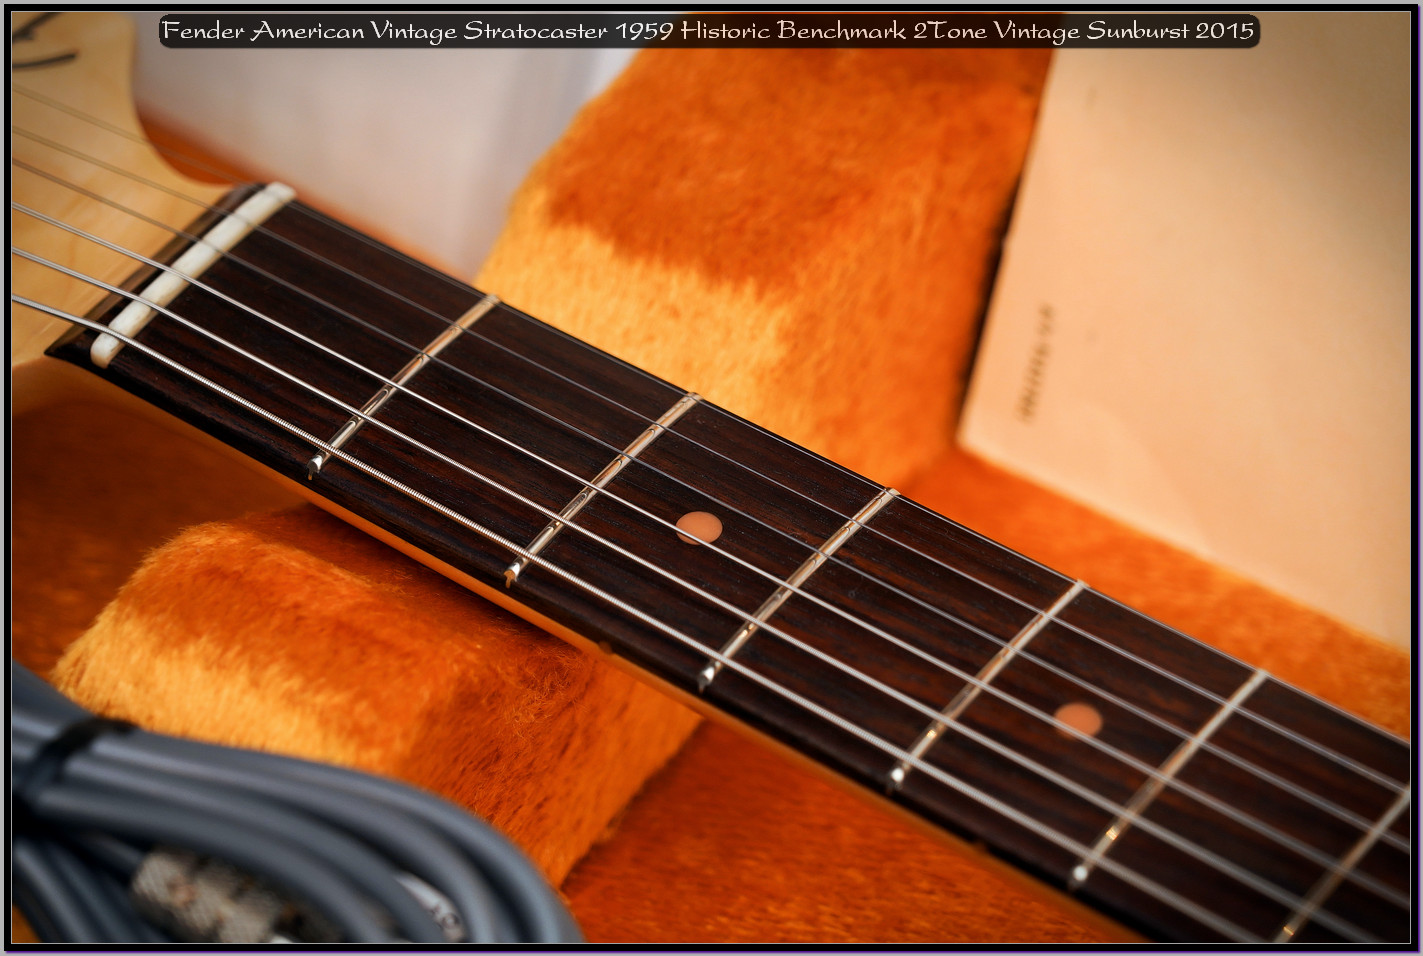 Fender American Vintage Stratocaster 1959 Historic Benchmark 2Tone Vintage Sunburst 2015 09_x1400.jpg